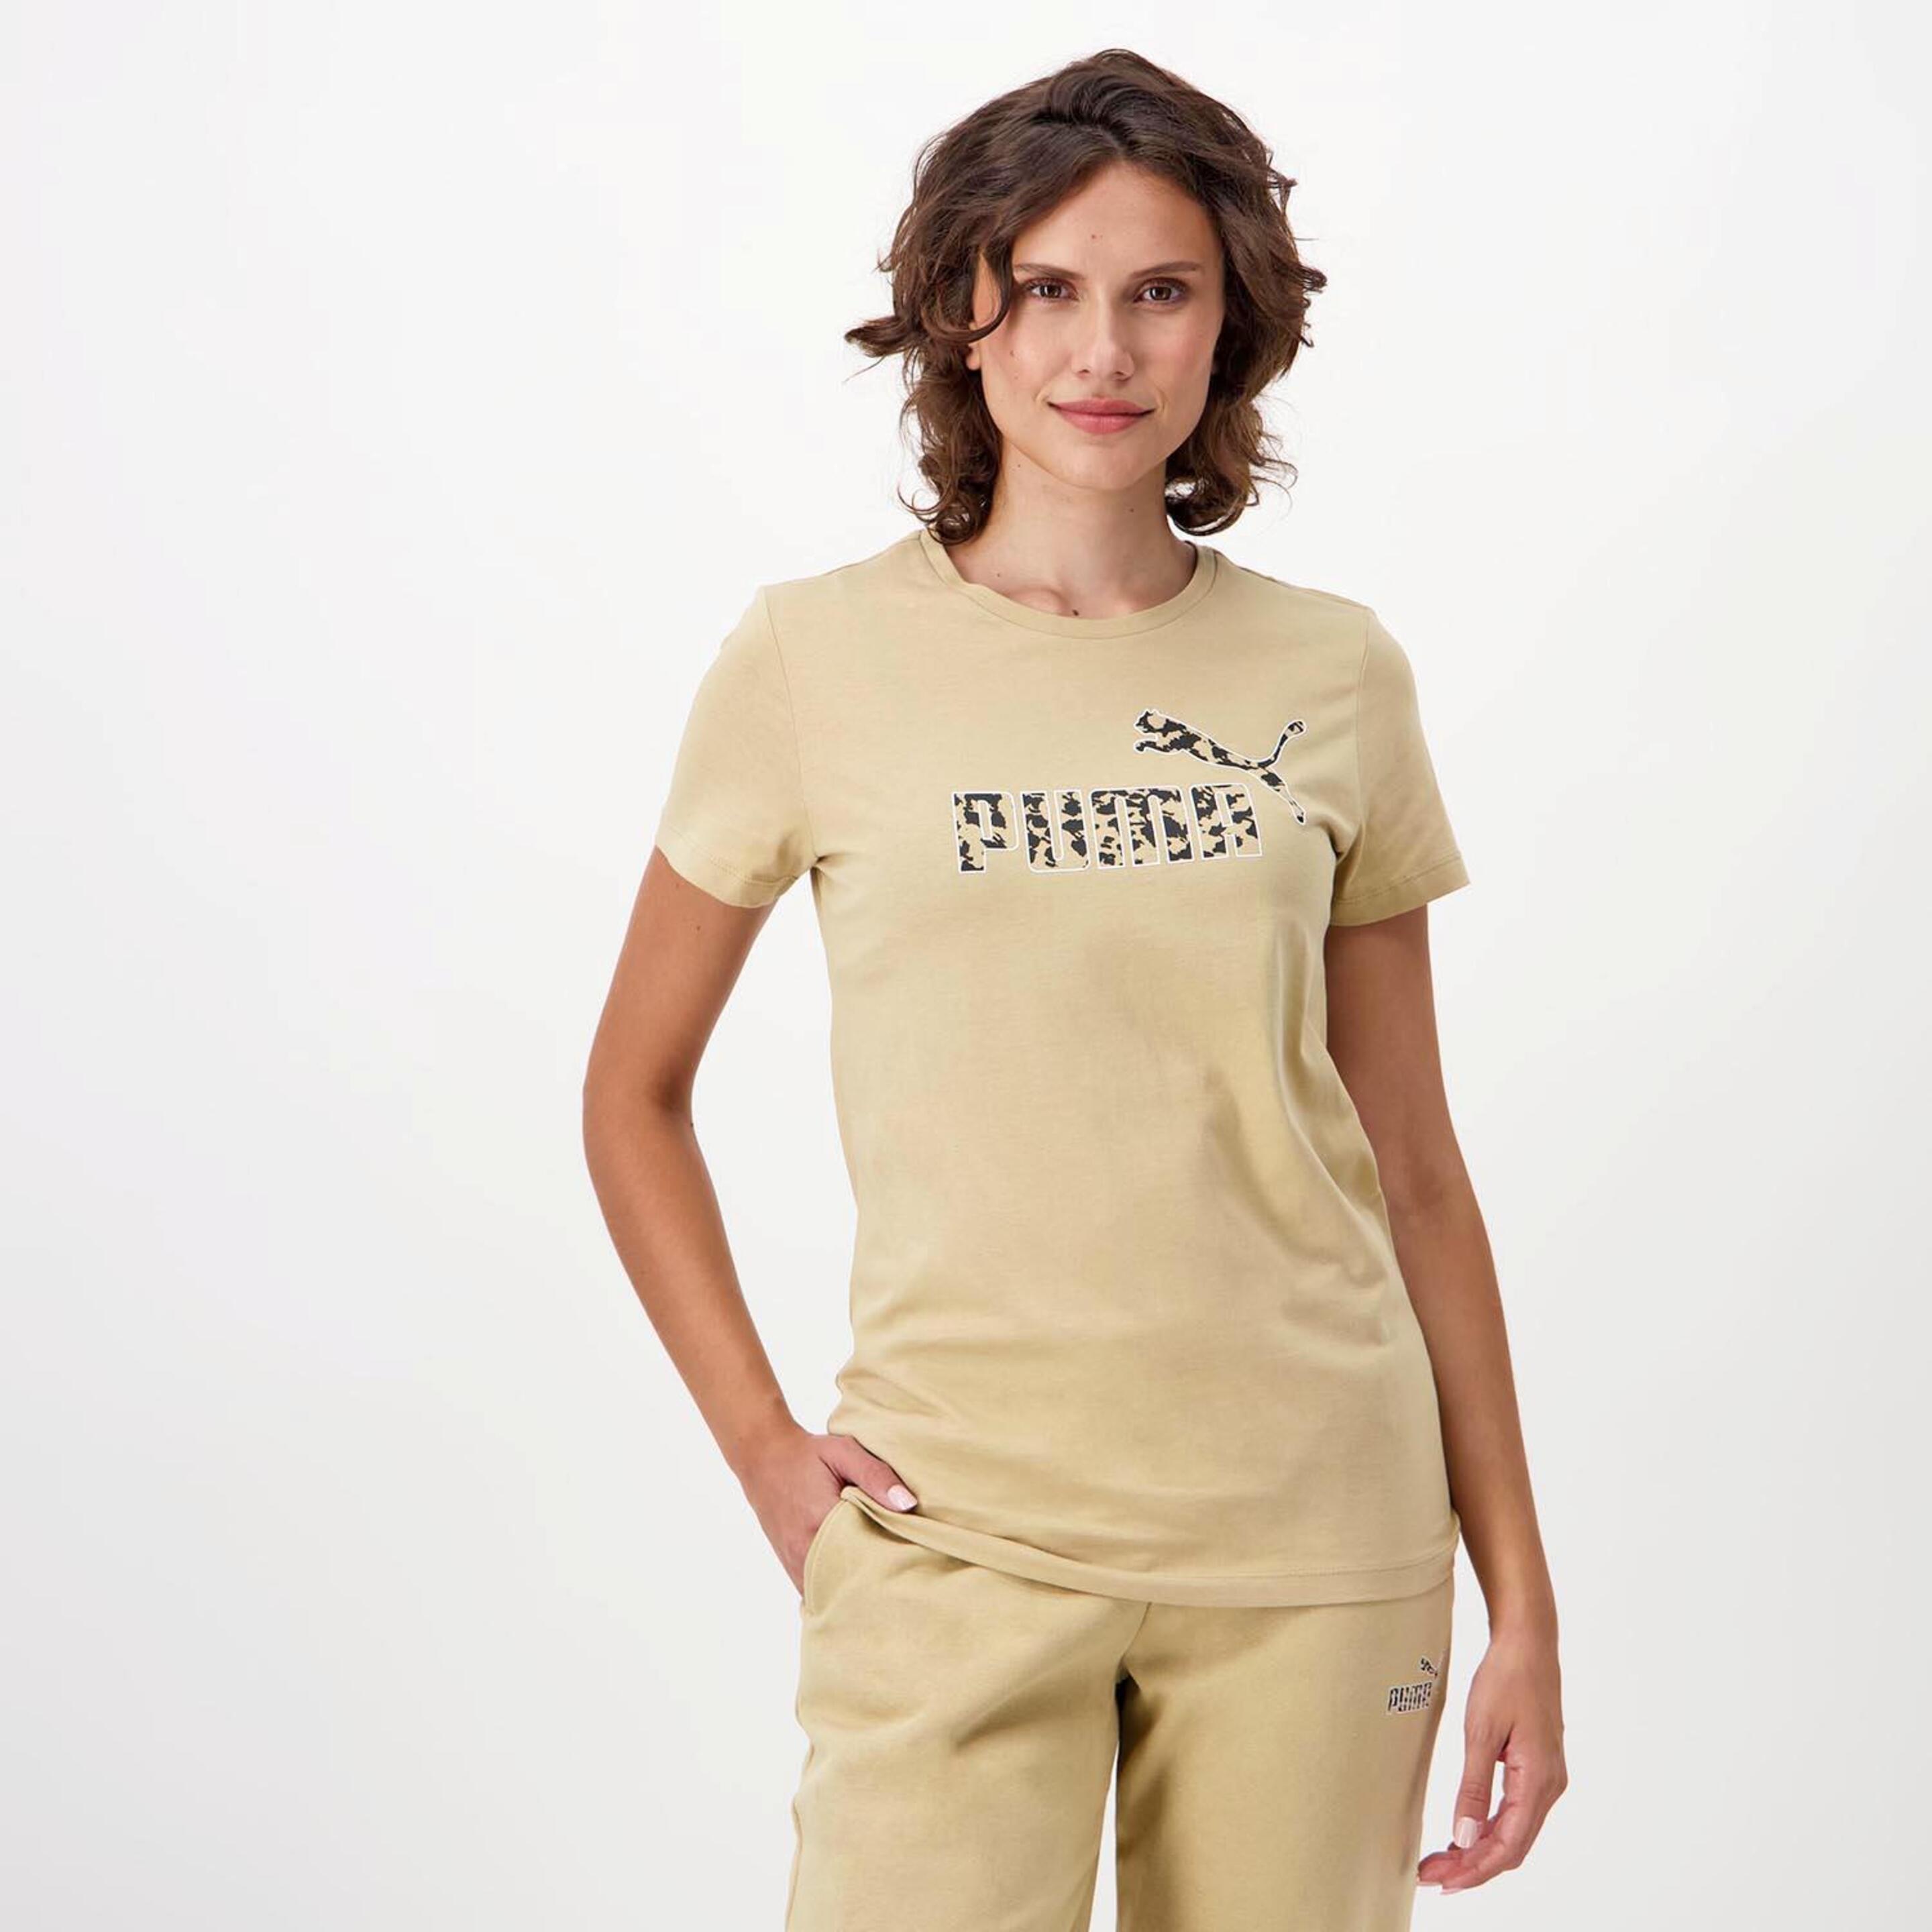 Puma Leopard - marron - Camiseta Mujer